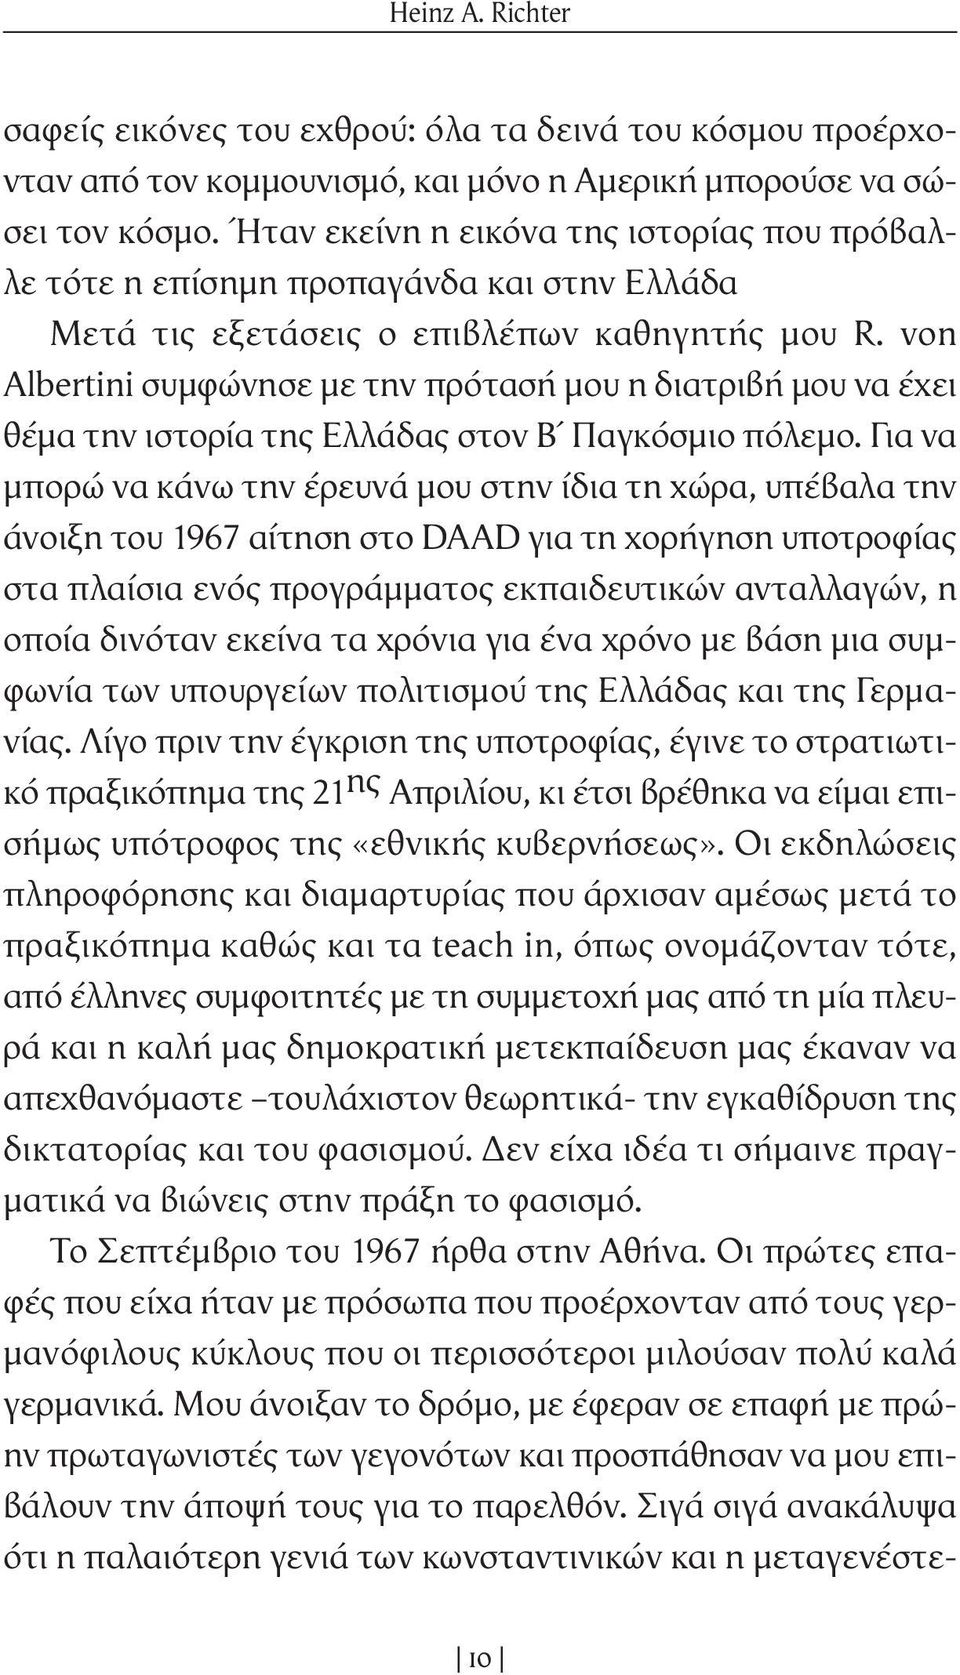 von Albertini συµφώνησε µε την πρότασή µου η διατριβή µου να έχει θέµα την ιστορία της Ελλάδας στον Β Παγκόσµιο πόλεµο.